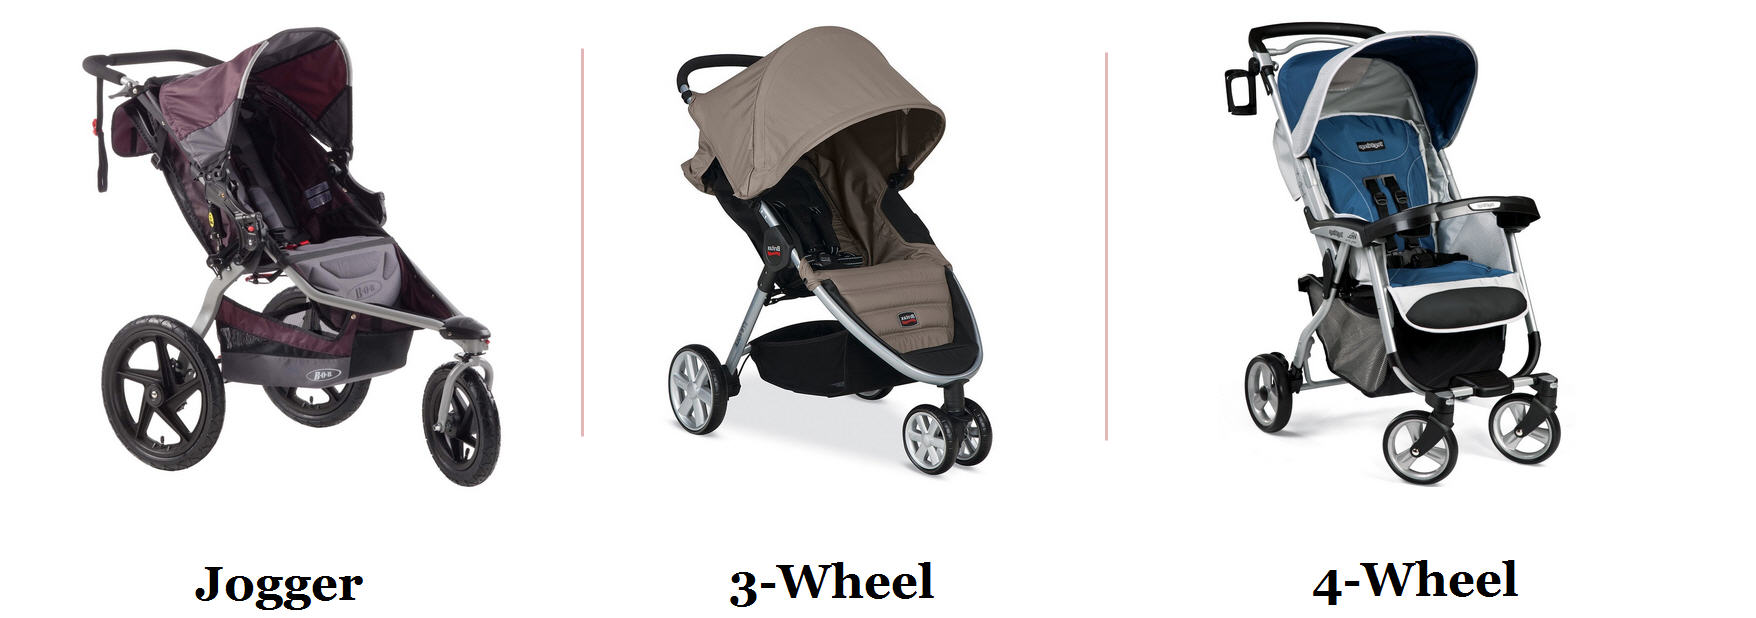 best 3 wheel stroller travel system